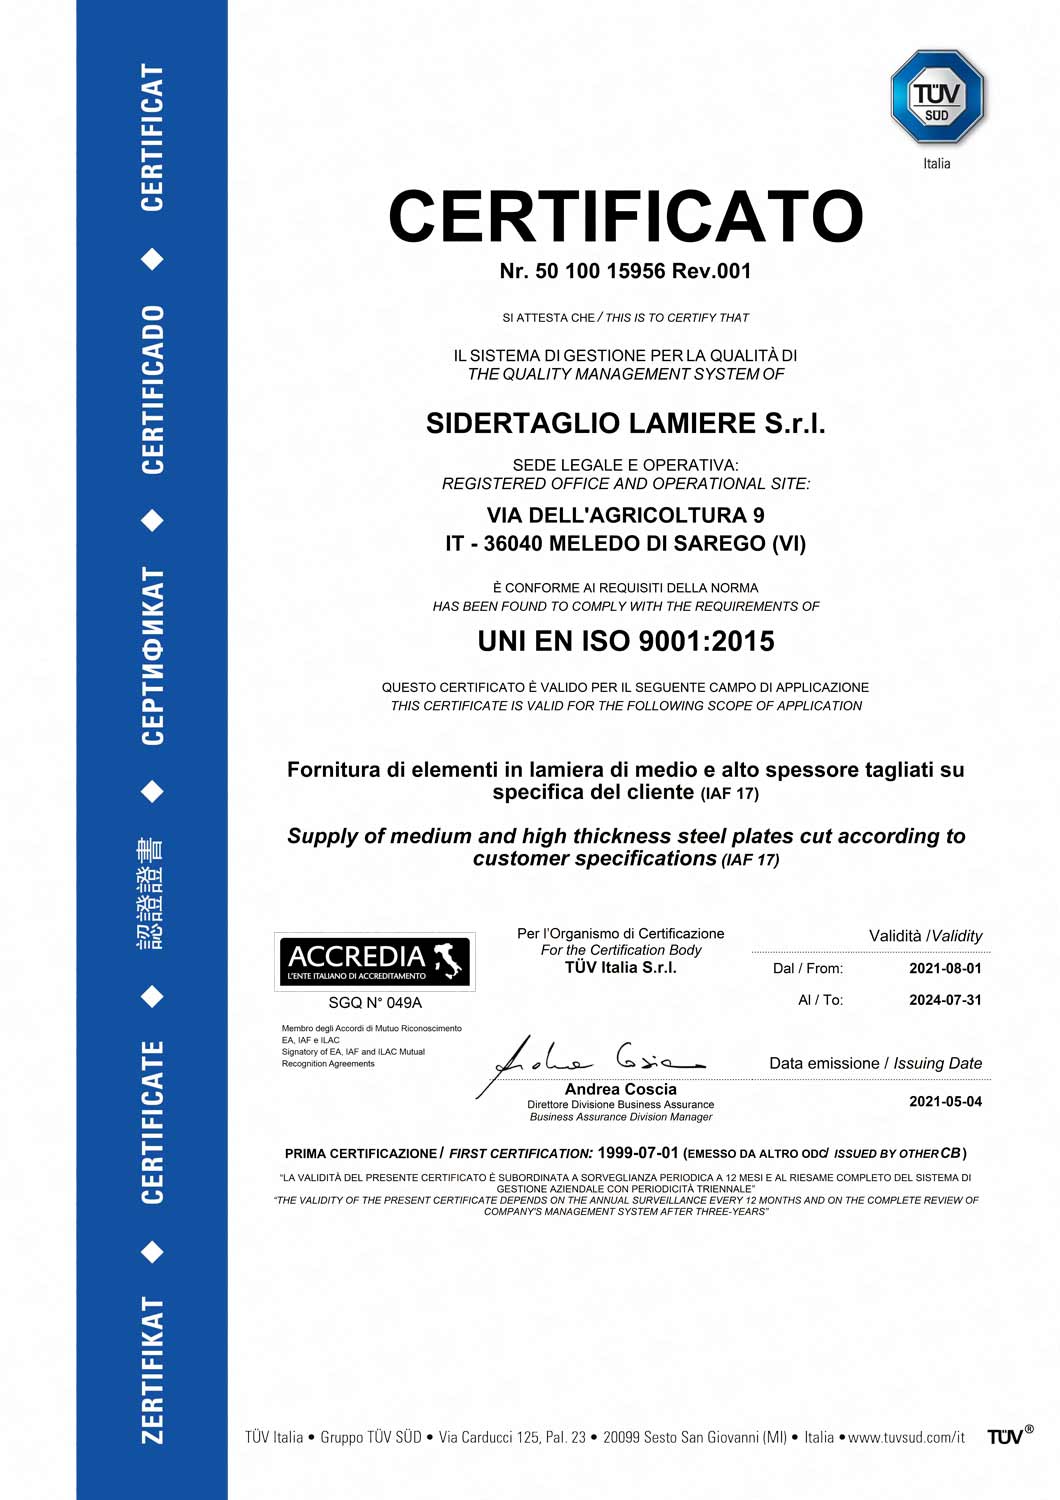 UNI EN ISO 9001 certifications